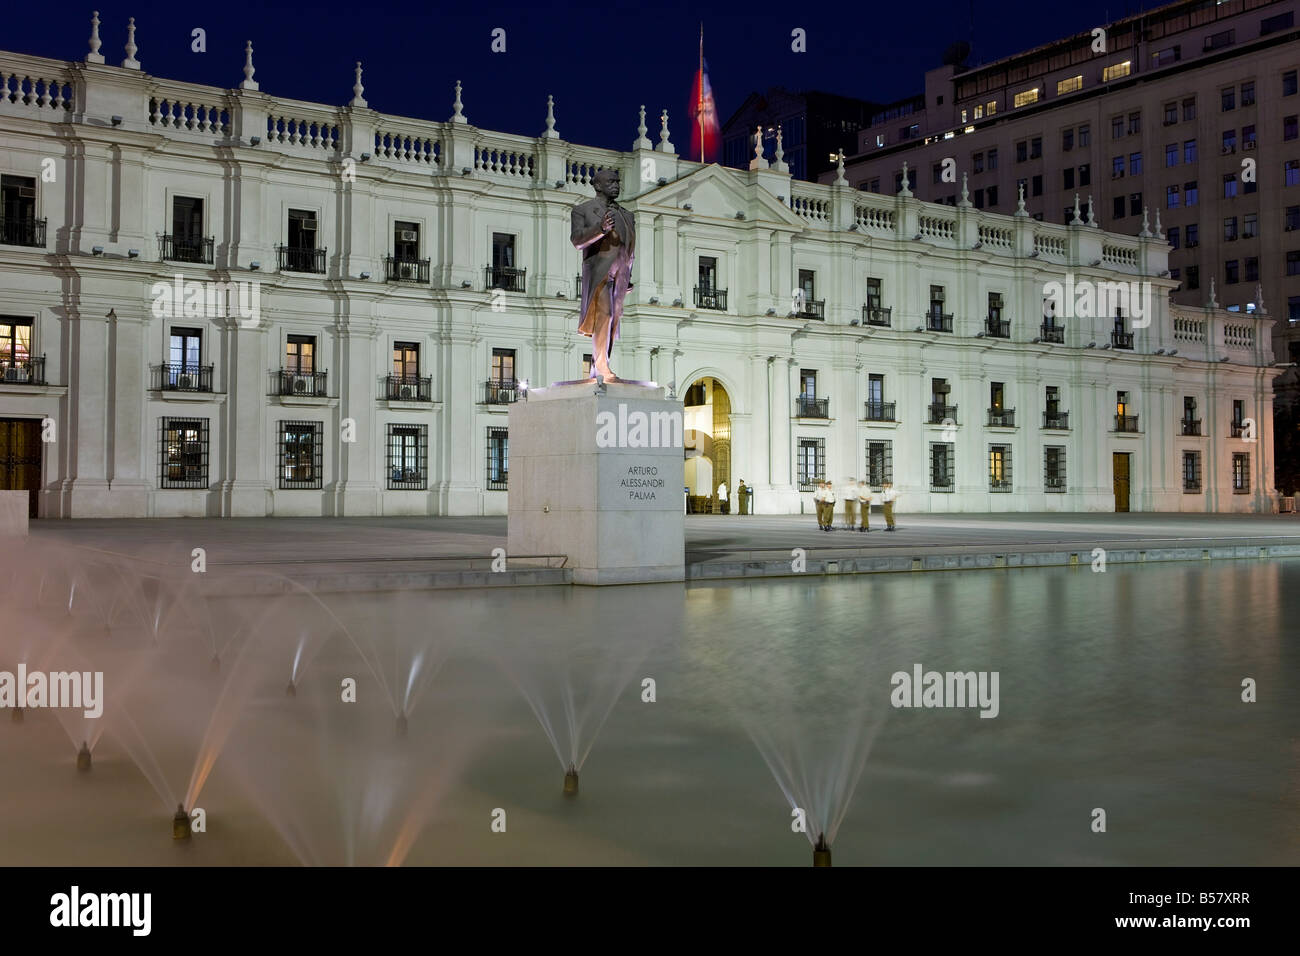 Palacio de la Moneda, Chile's presidential palace illuminated at dusk, Santiago, Chile, South America Stock Photo